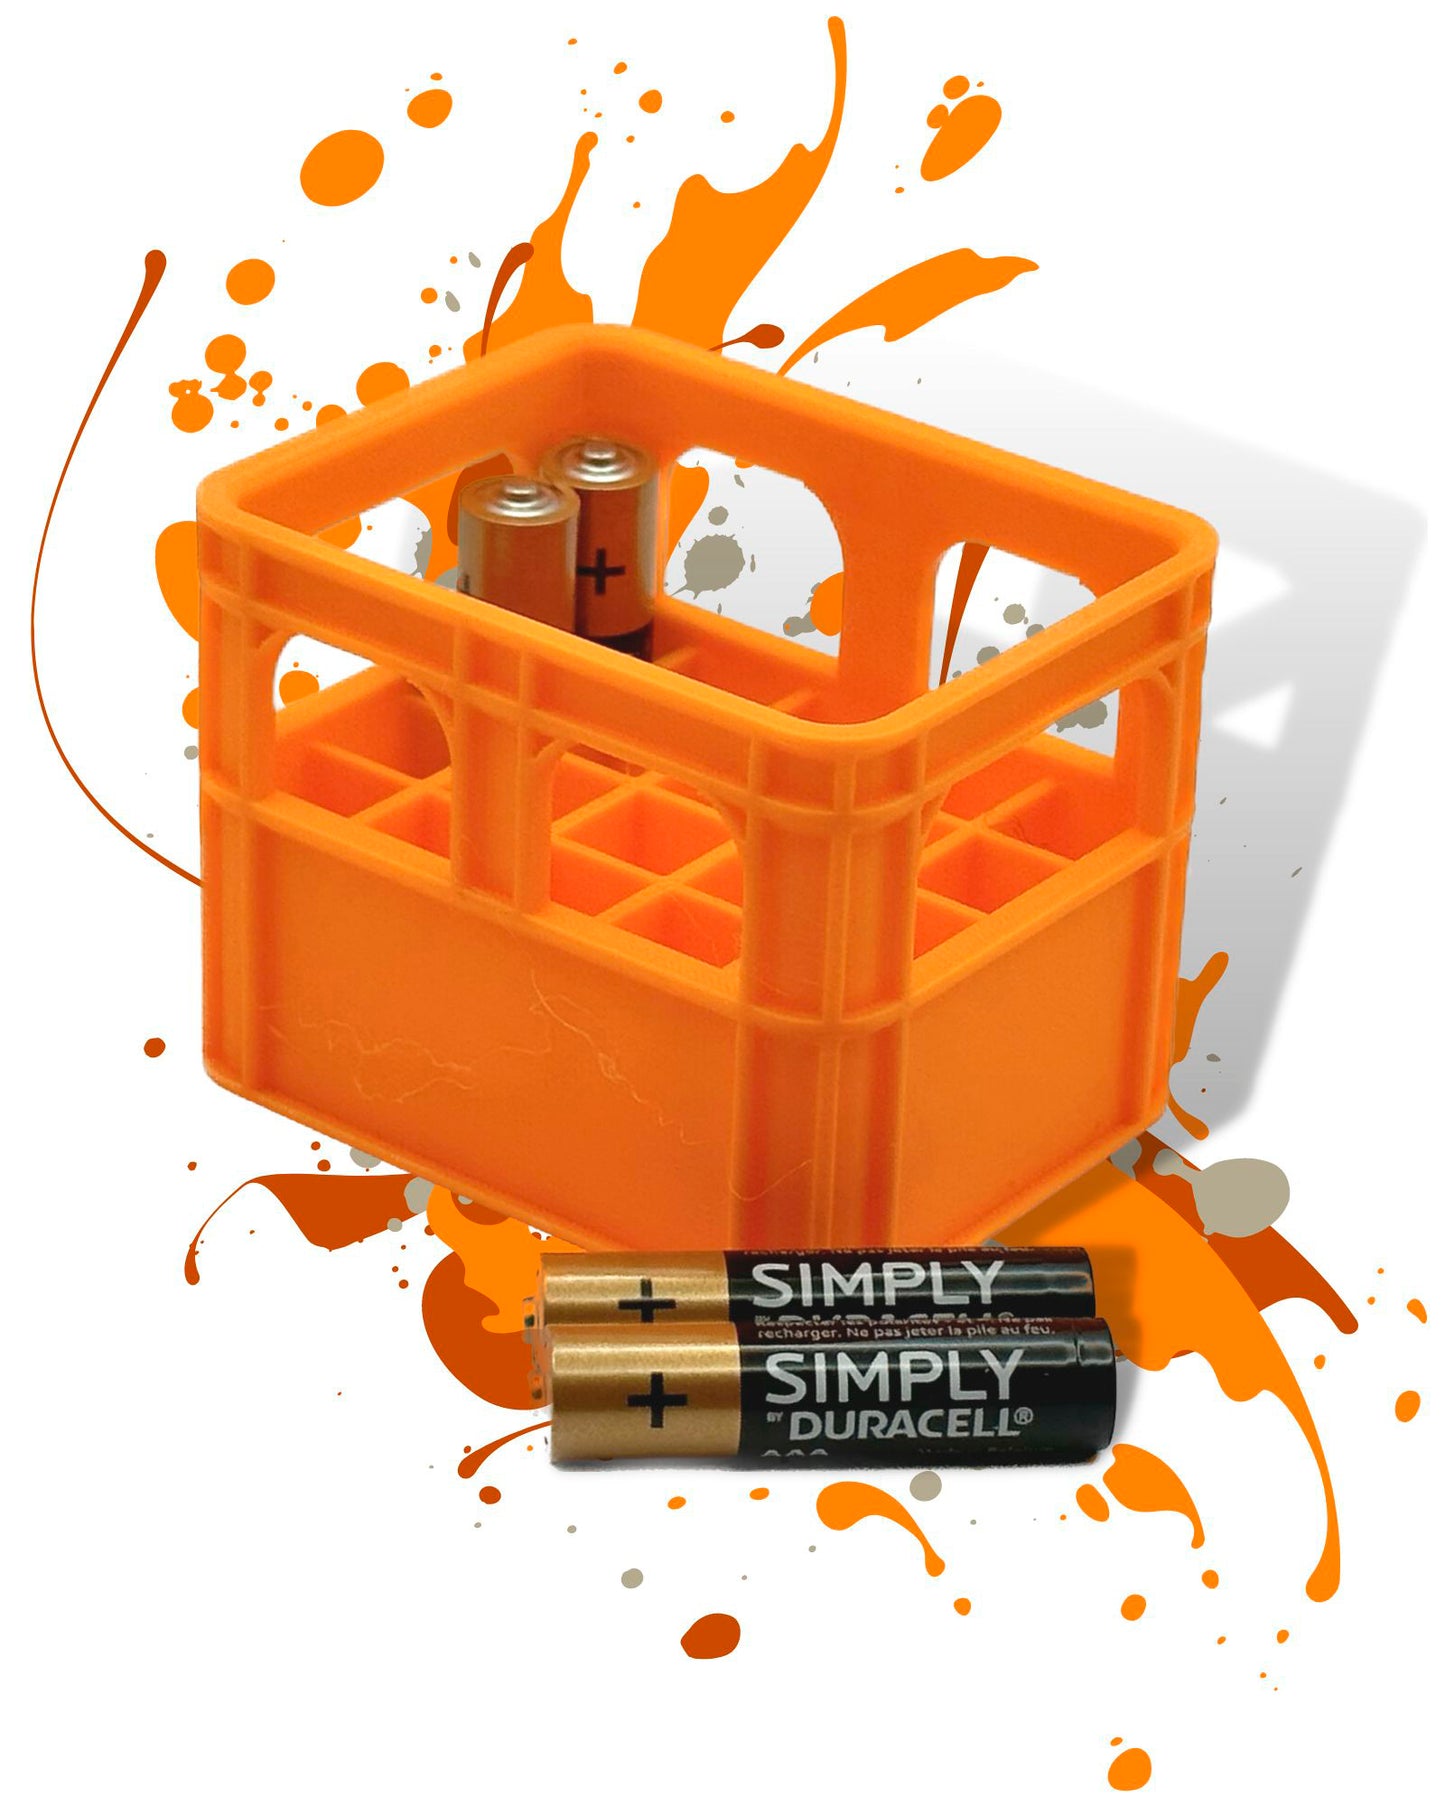 Batterie Bierkiste Bierkasten Batteriekiste Batteriekasten Batteriebox Minikiste Minibox für Aufbewahrung von Batterien AA, AAA, 9V, Leerkiste - 3D gedruckt